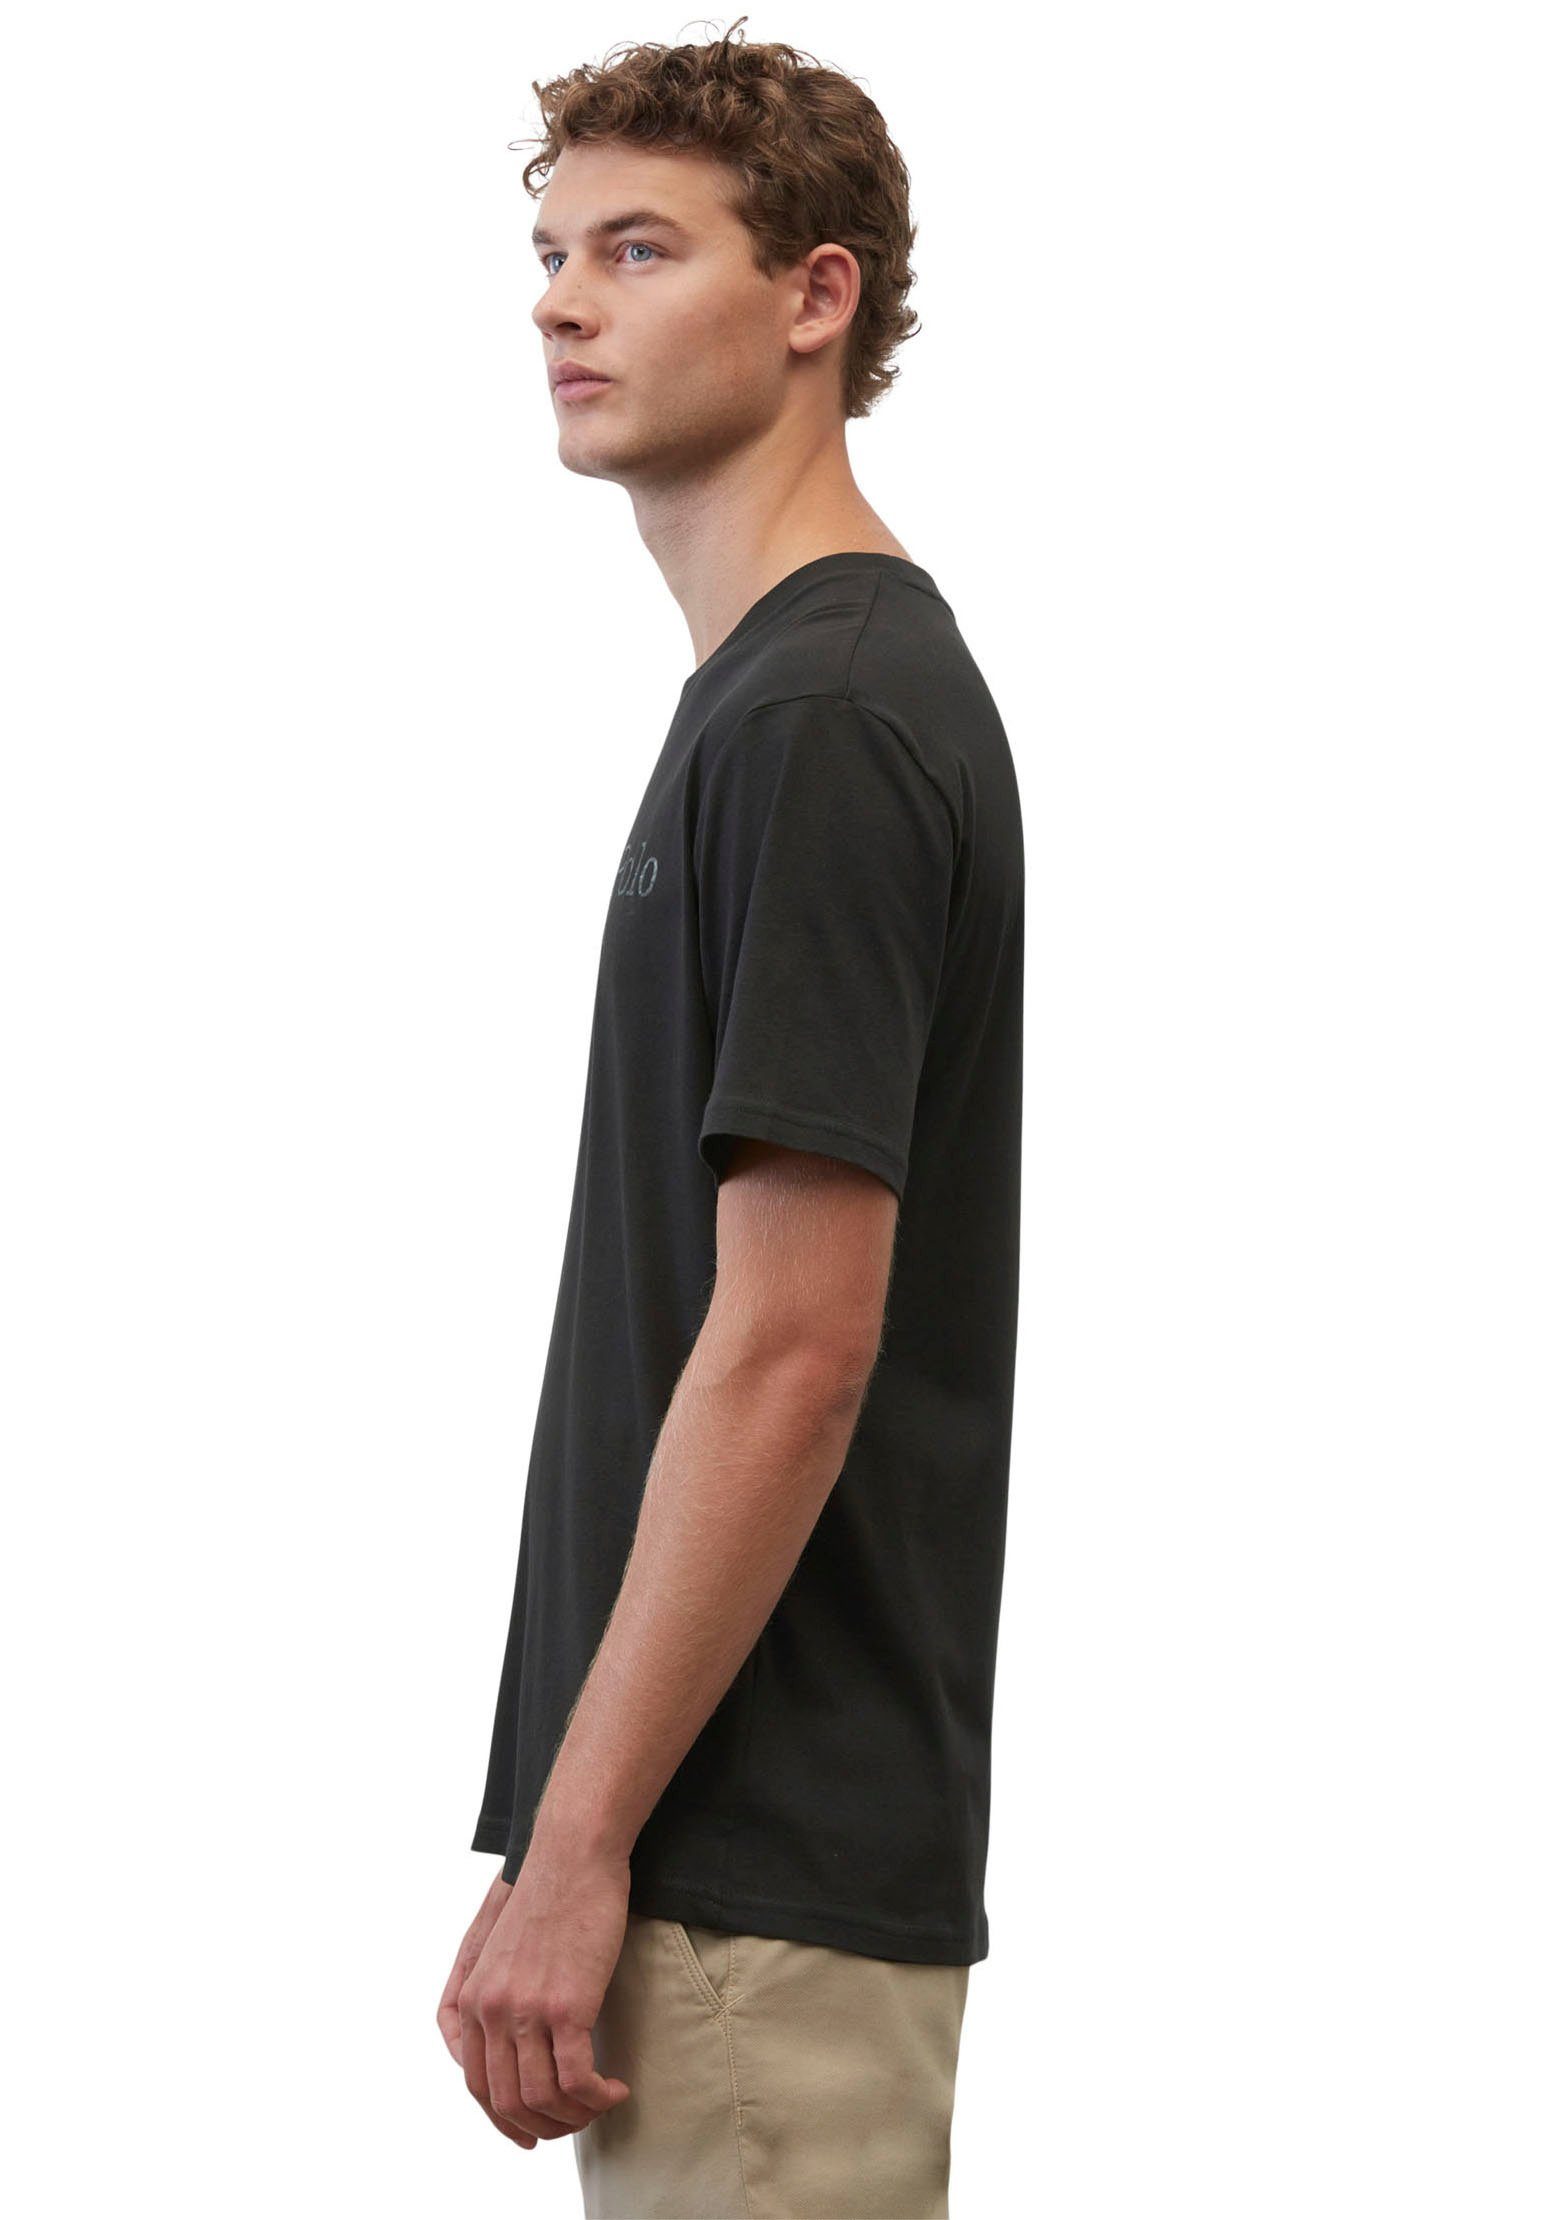 O'Polo schwarz Marc T-Shirt Logo-T-Shirt klassisches